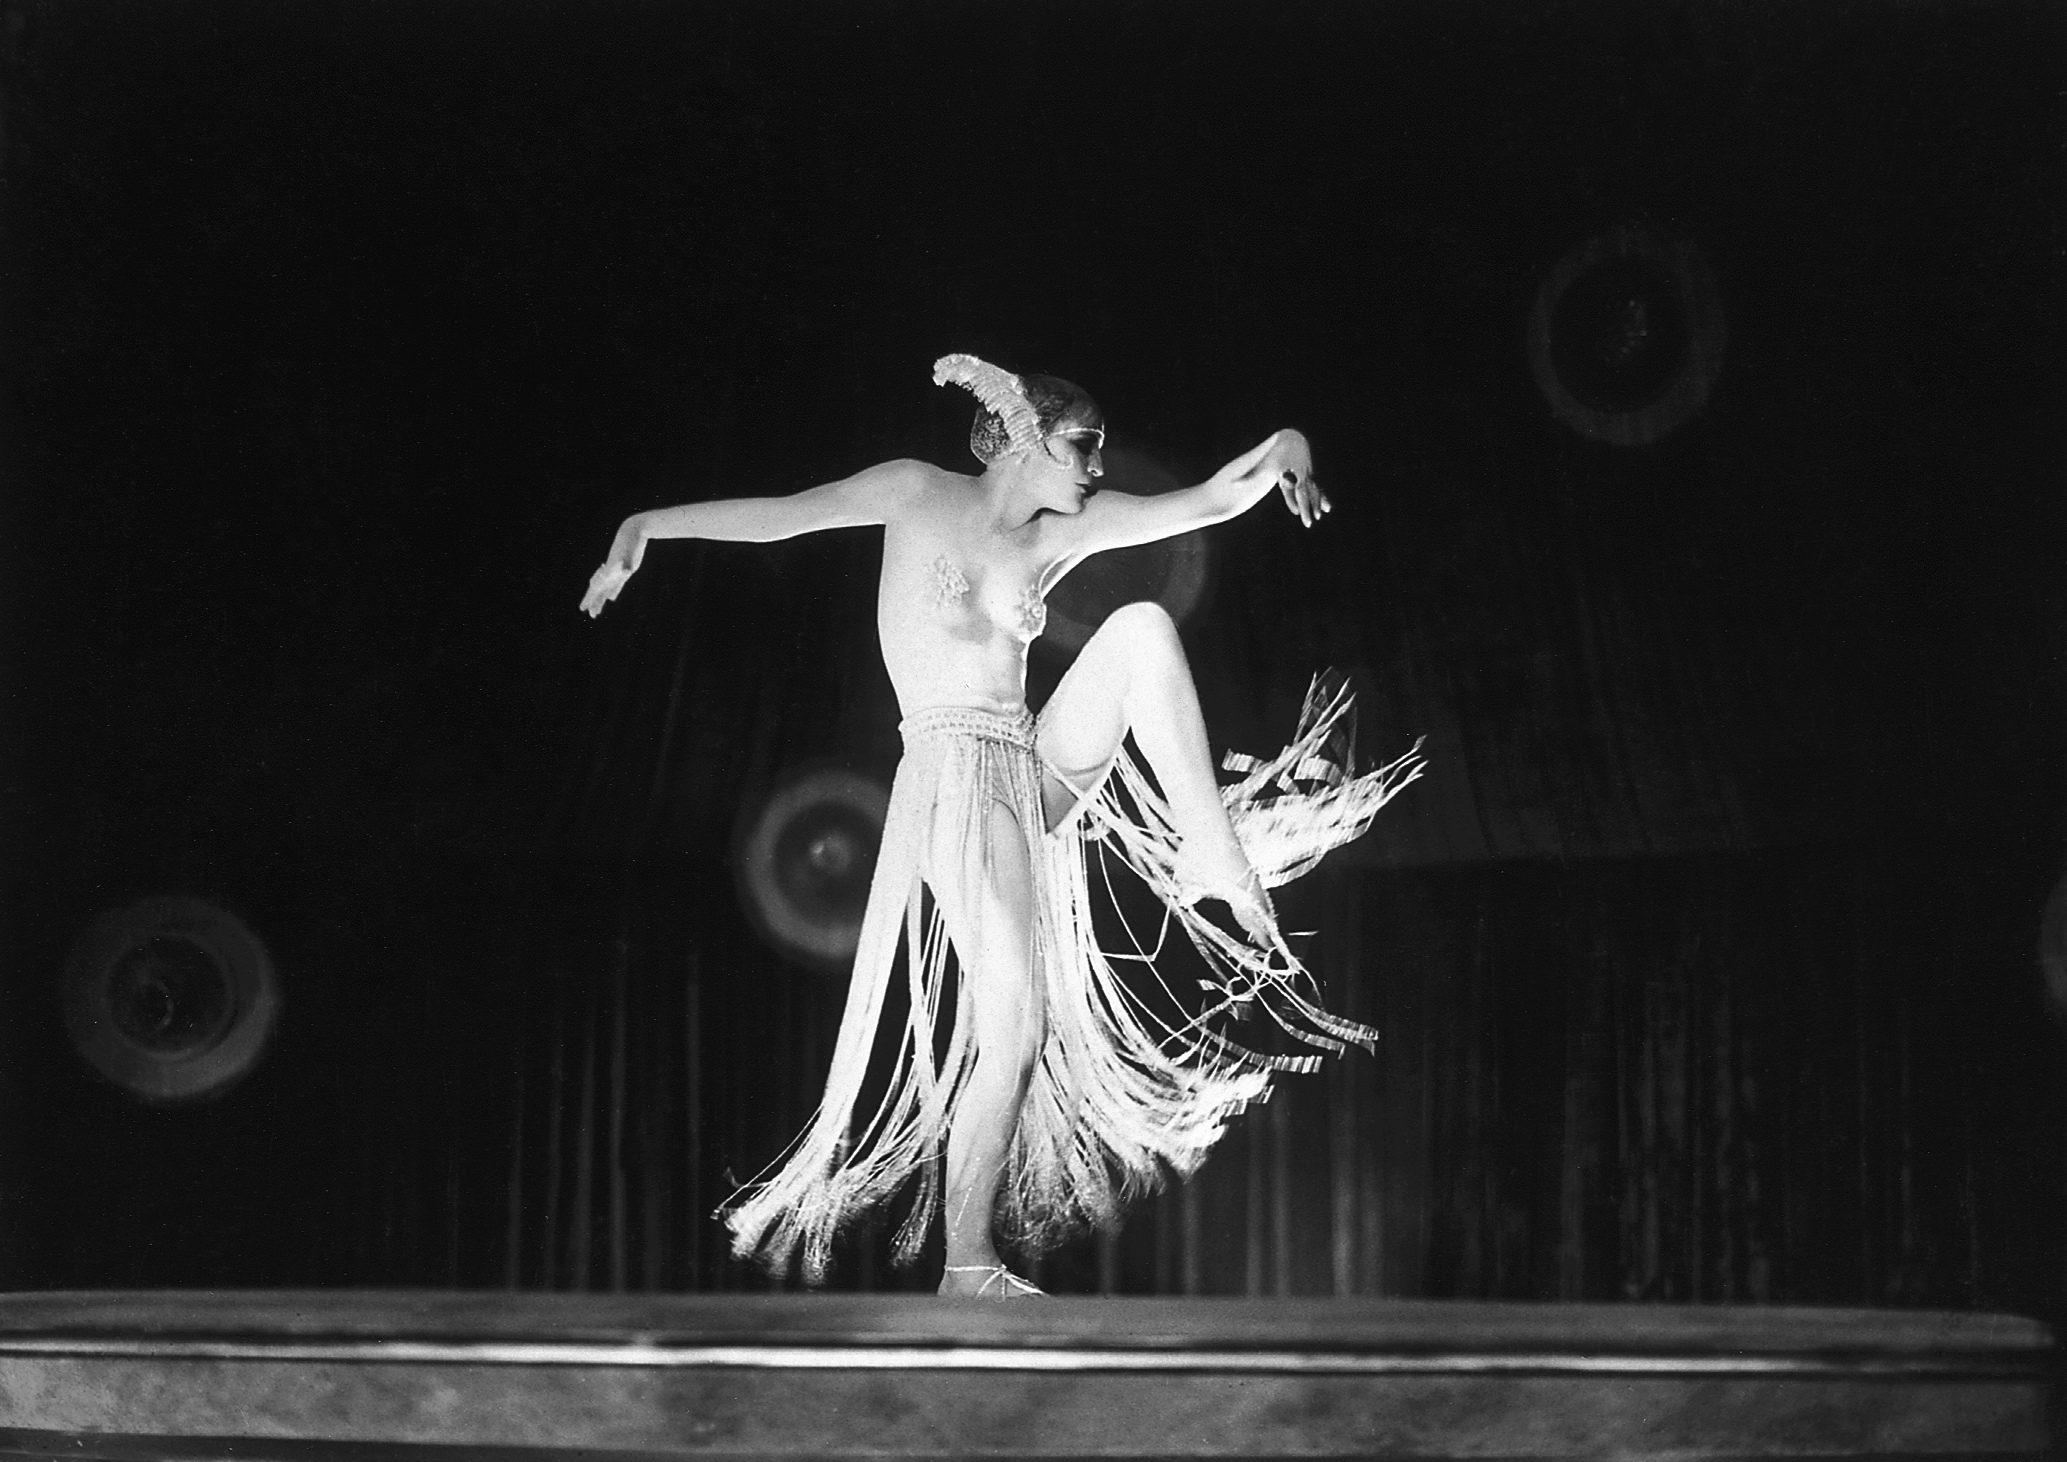 Szenenfoto aus dem Film Metropolis (Deutschland 1927, Regie: Fritz Lang)